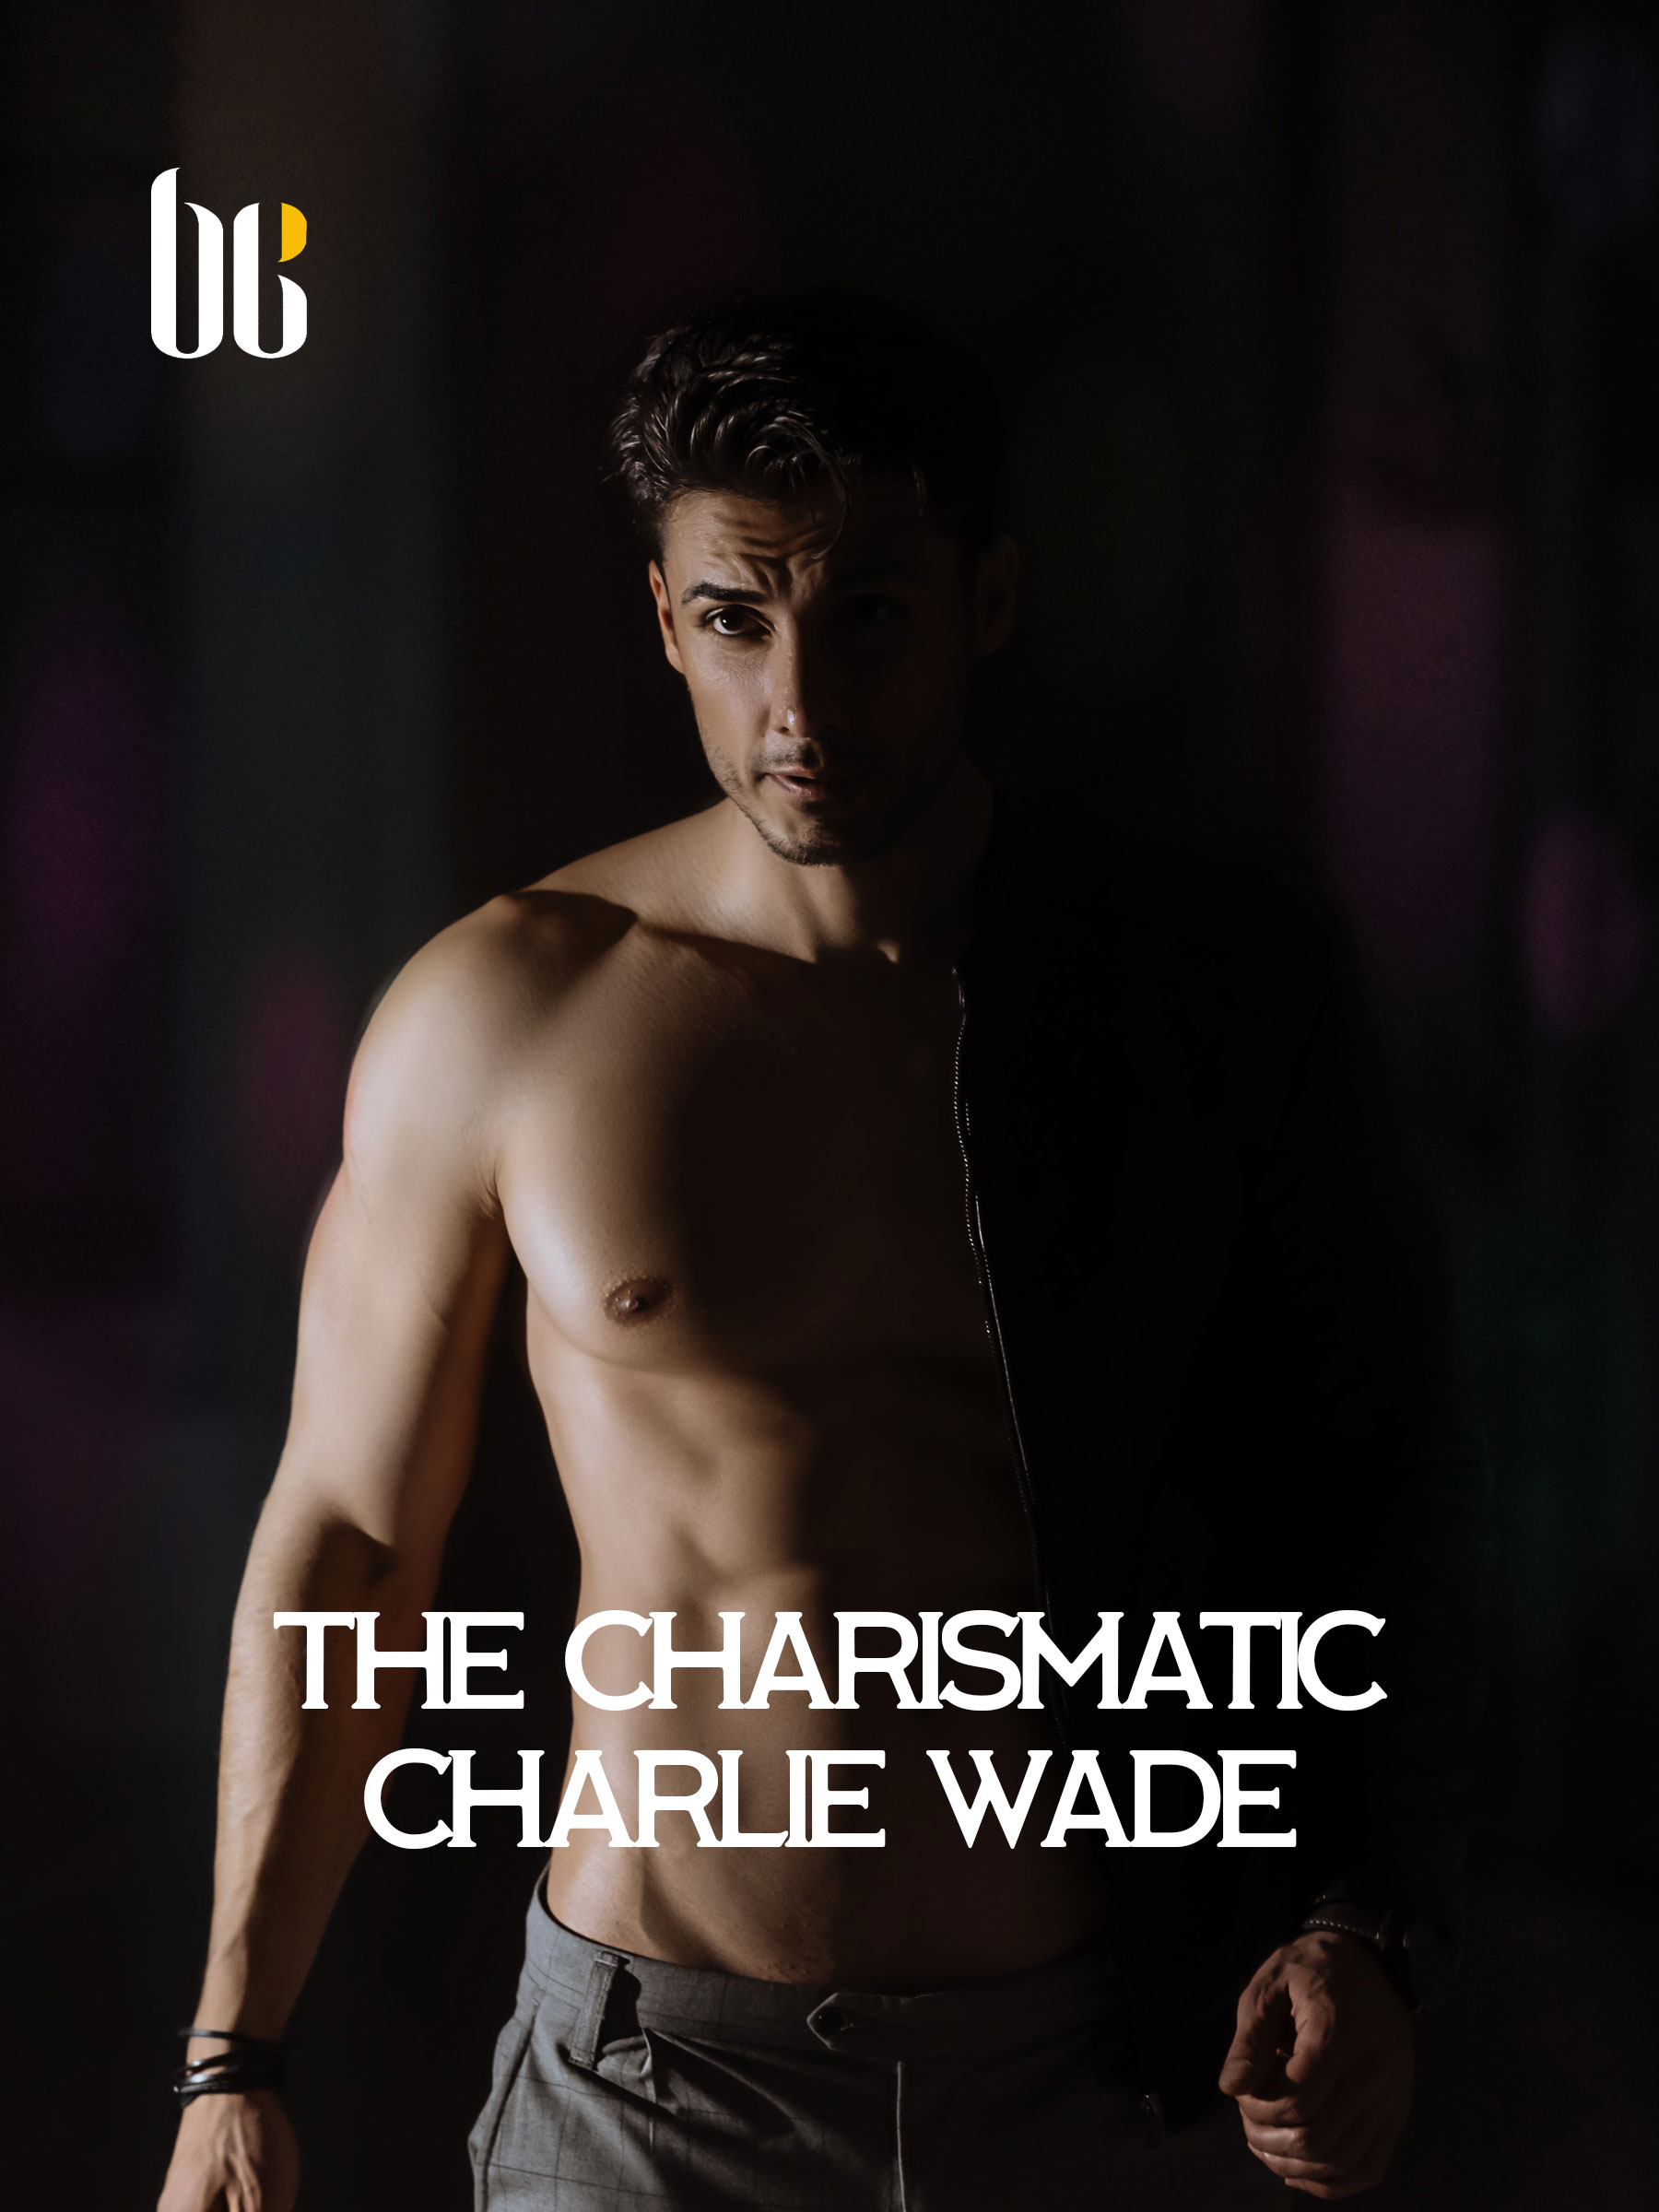 Cerita Si Karismatik Charlie Wade - Charlie Wade Story ...